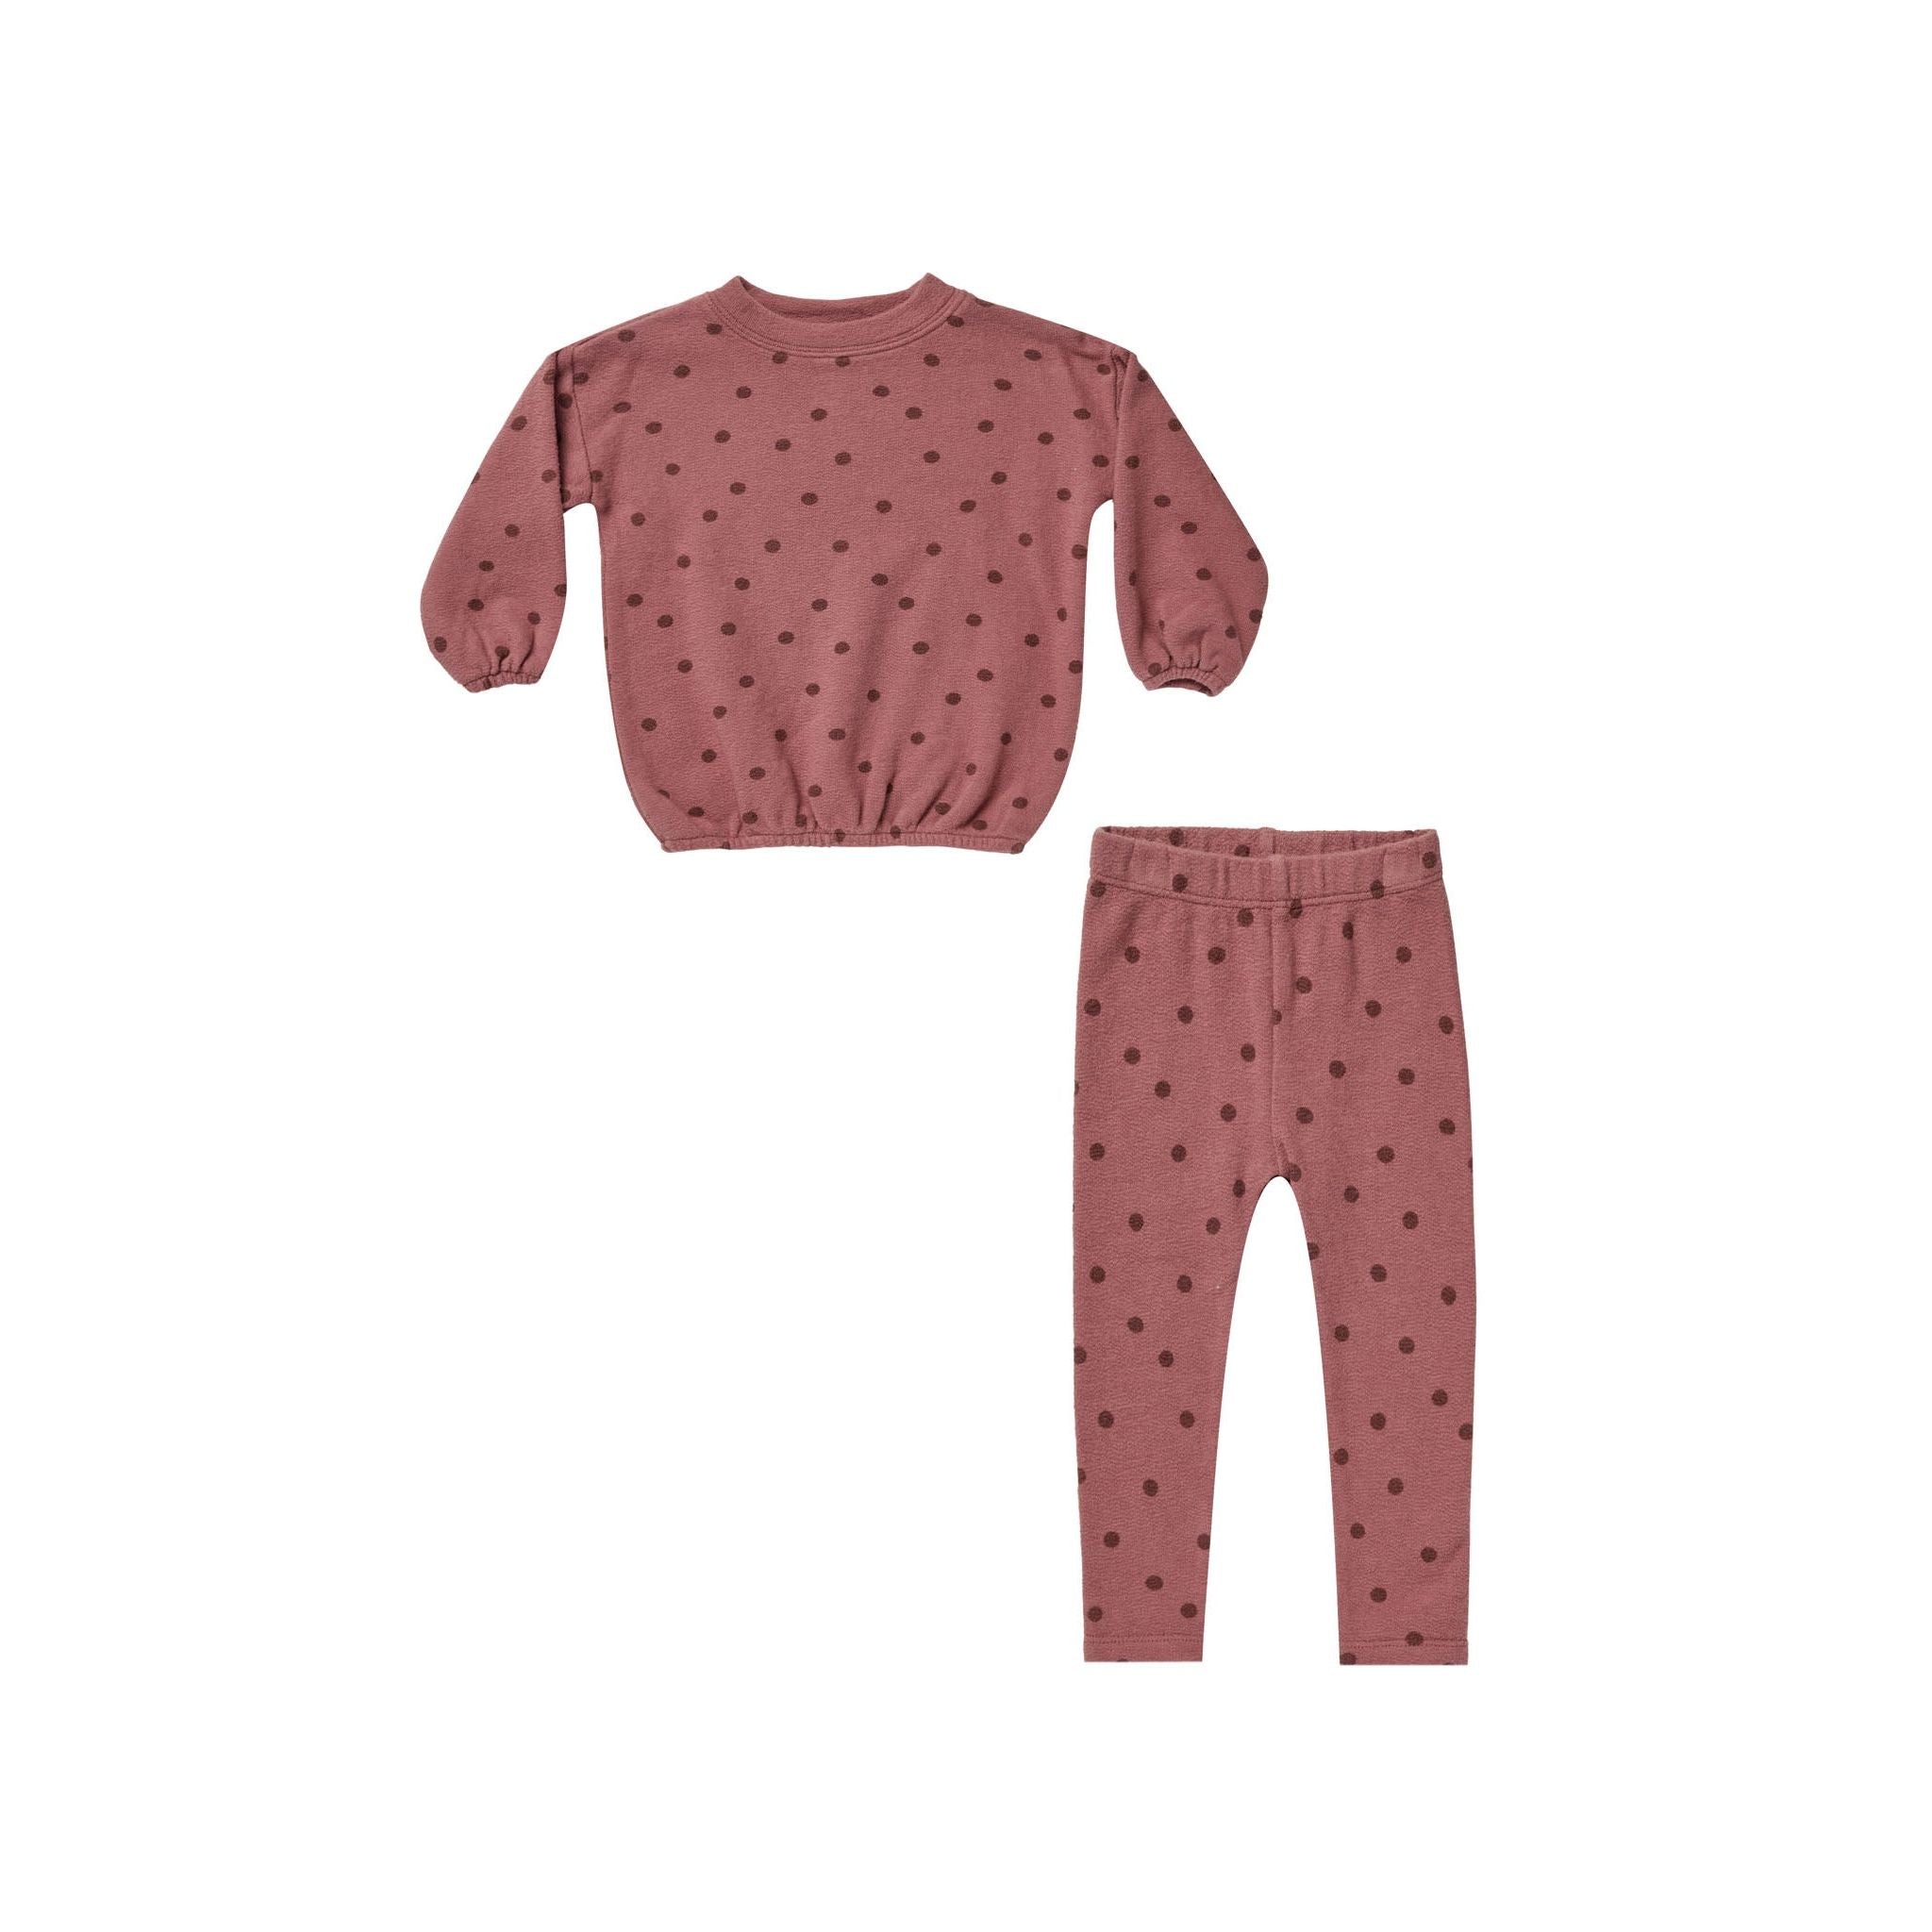 spongey knit sweatshirt and leggings in raspberry color with polka dot print